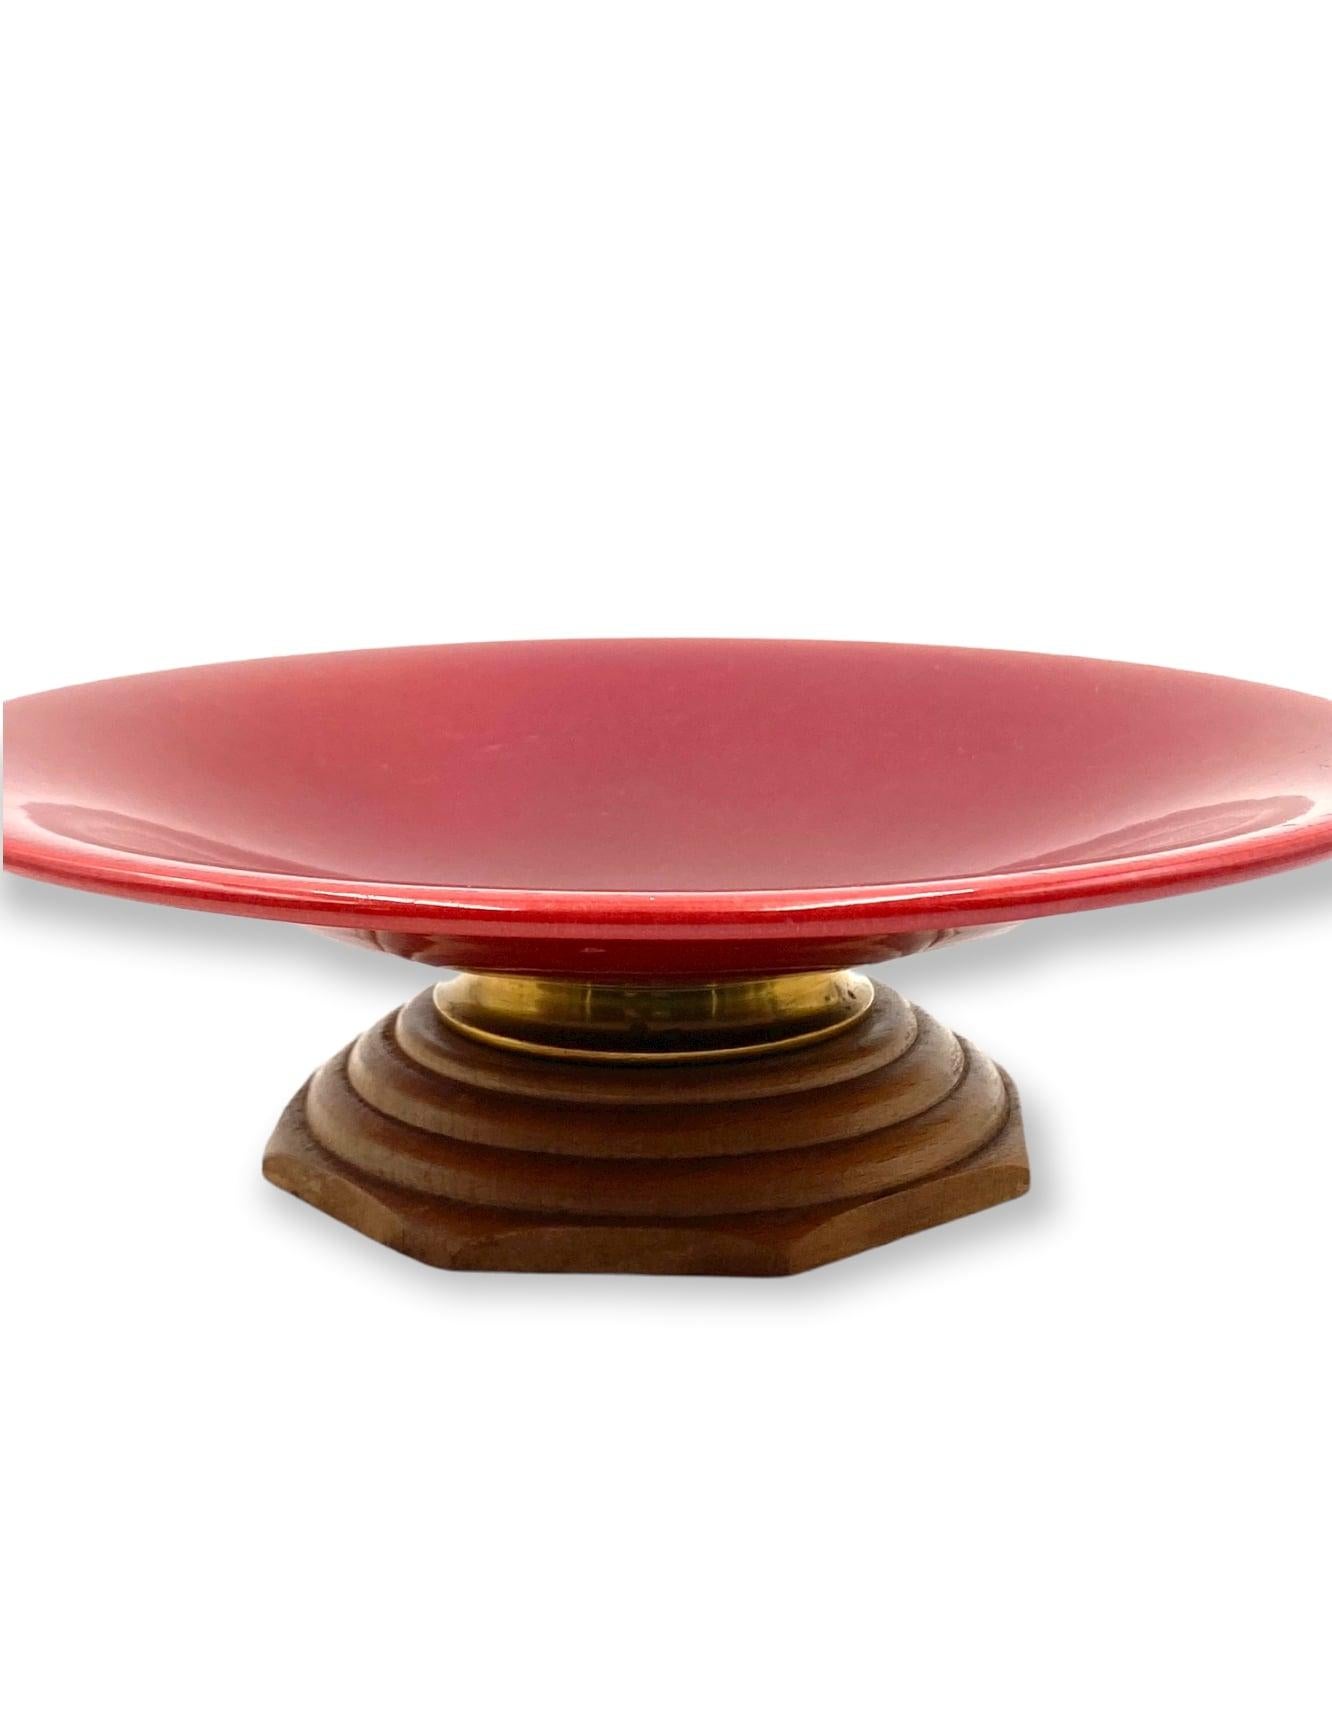 Ceramic Modern Red Vide Poche / Centerpiece, Sevres, France, 1940s For Sale